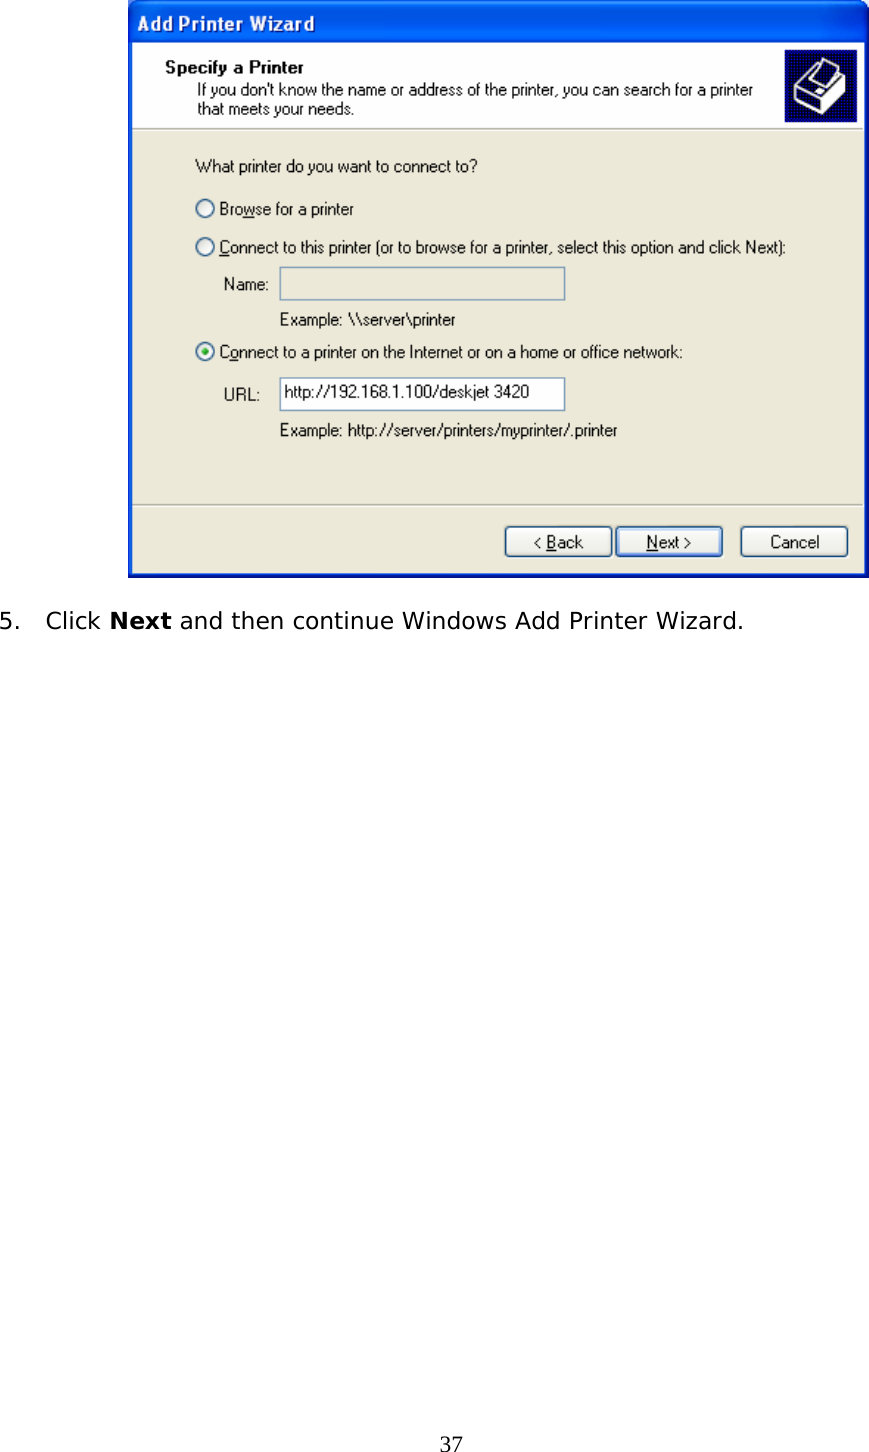     37  5. Click Next and then continue Windows Add Printer Wizard. 